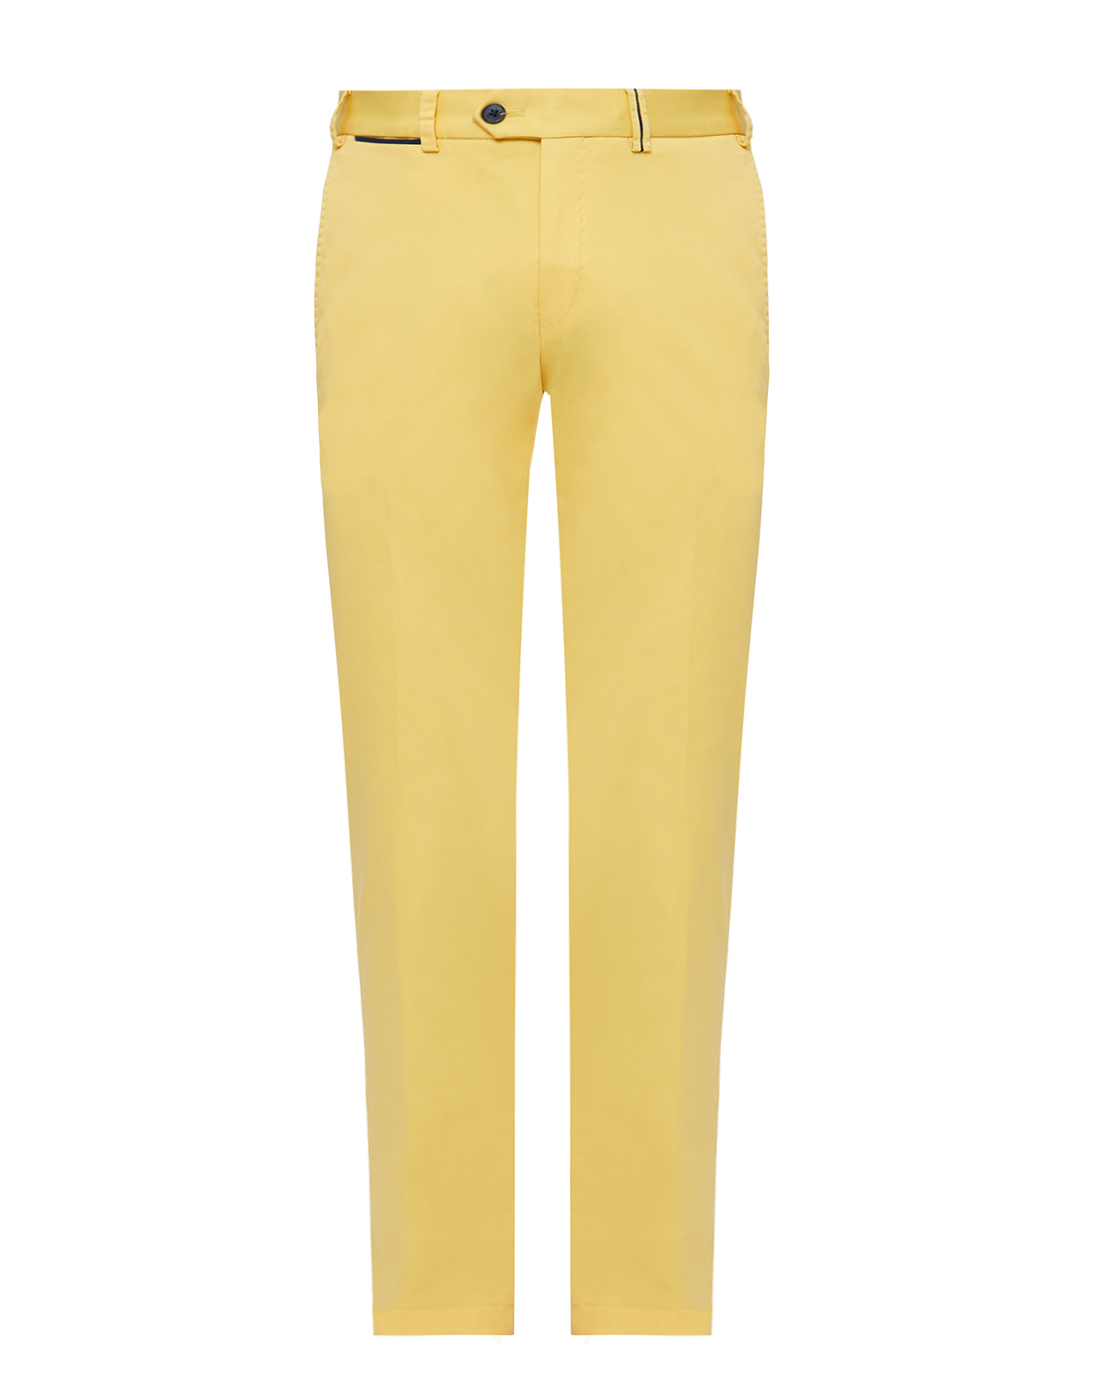 Мужские желтые брюки Hiltl  S73295 76 53000-1